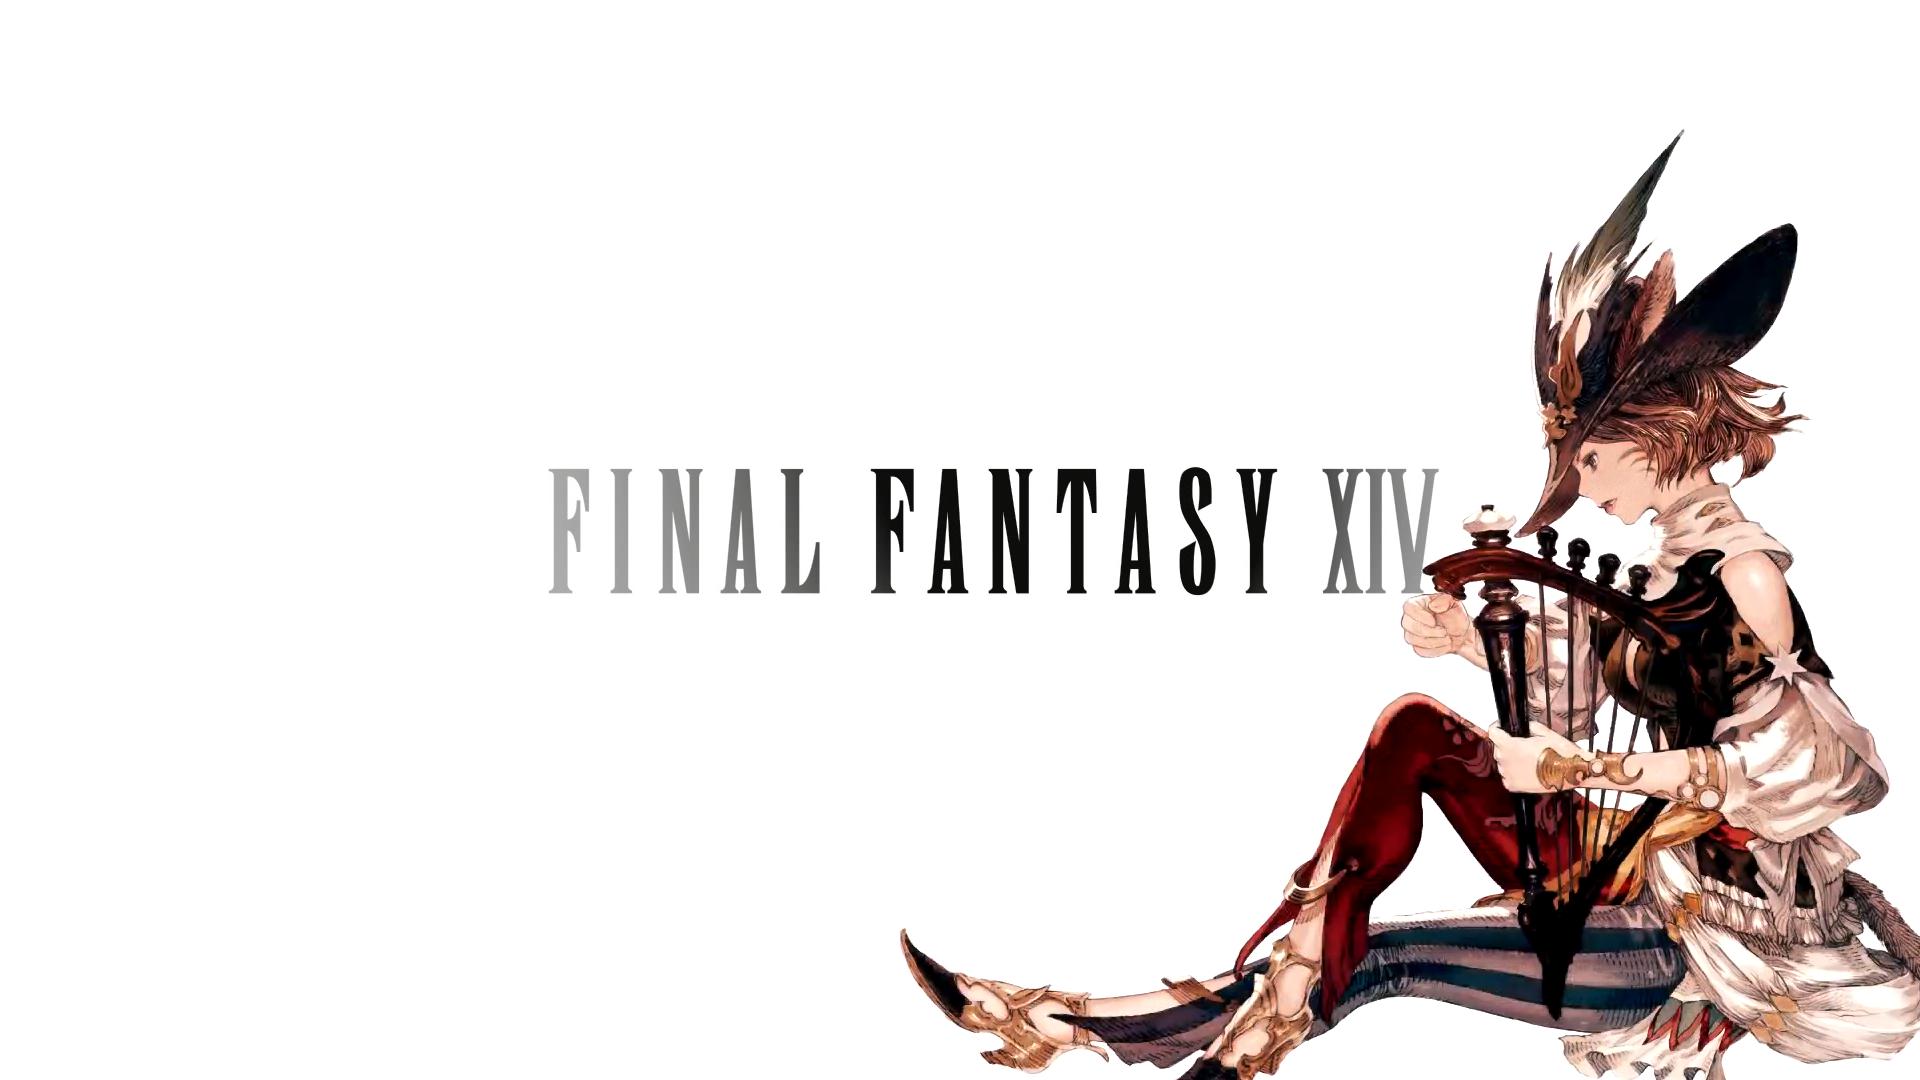 final fantasy xiv, video game, final fantasy